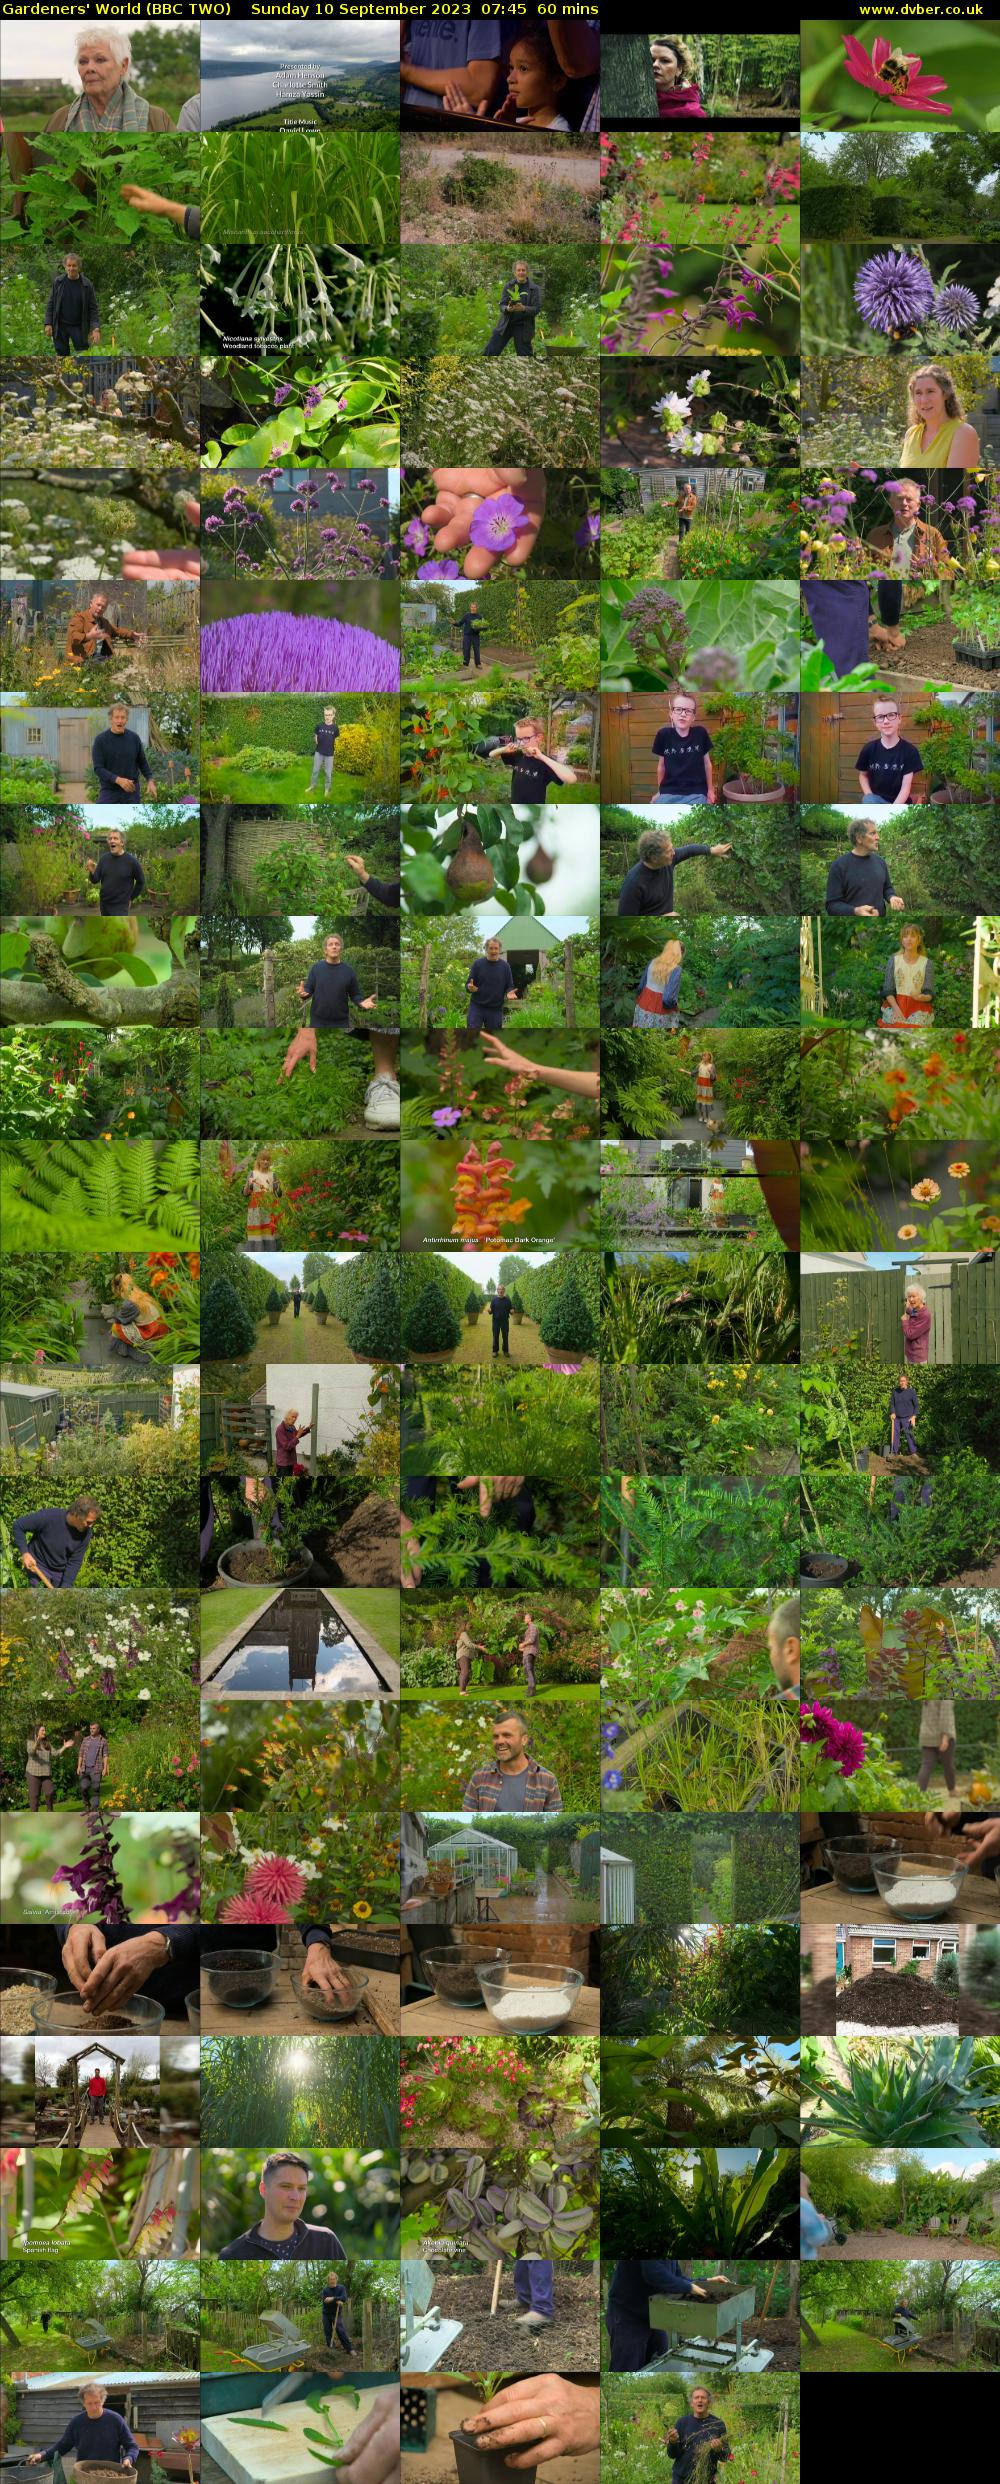 Gardeners' World (BBC TWO) Sunday 10 September 2023 07:45 - 08:45